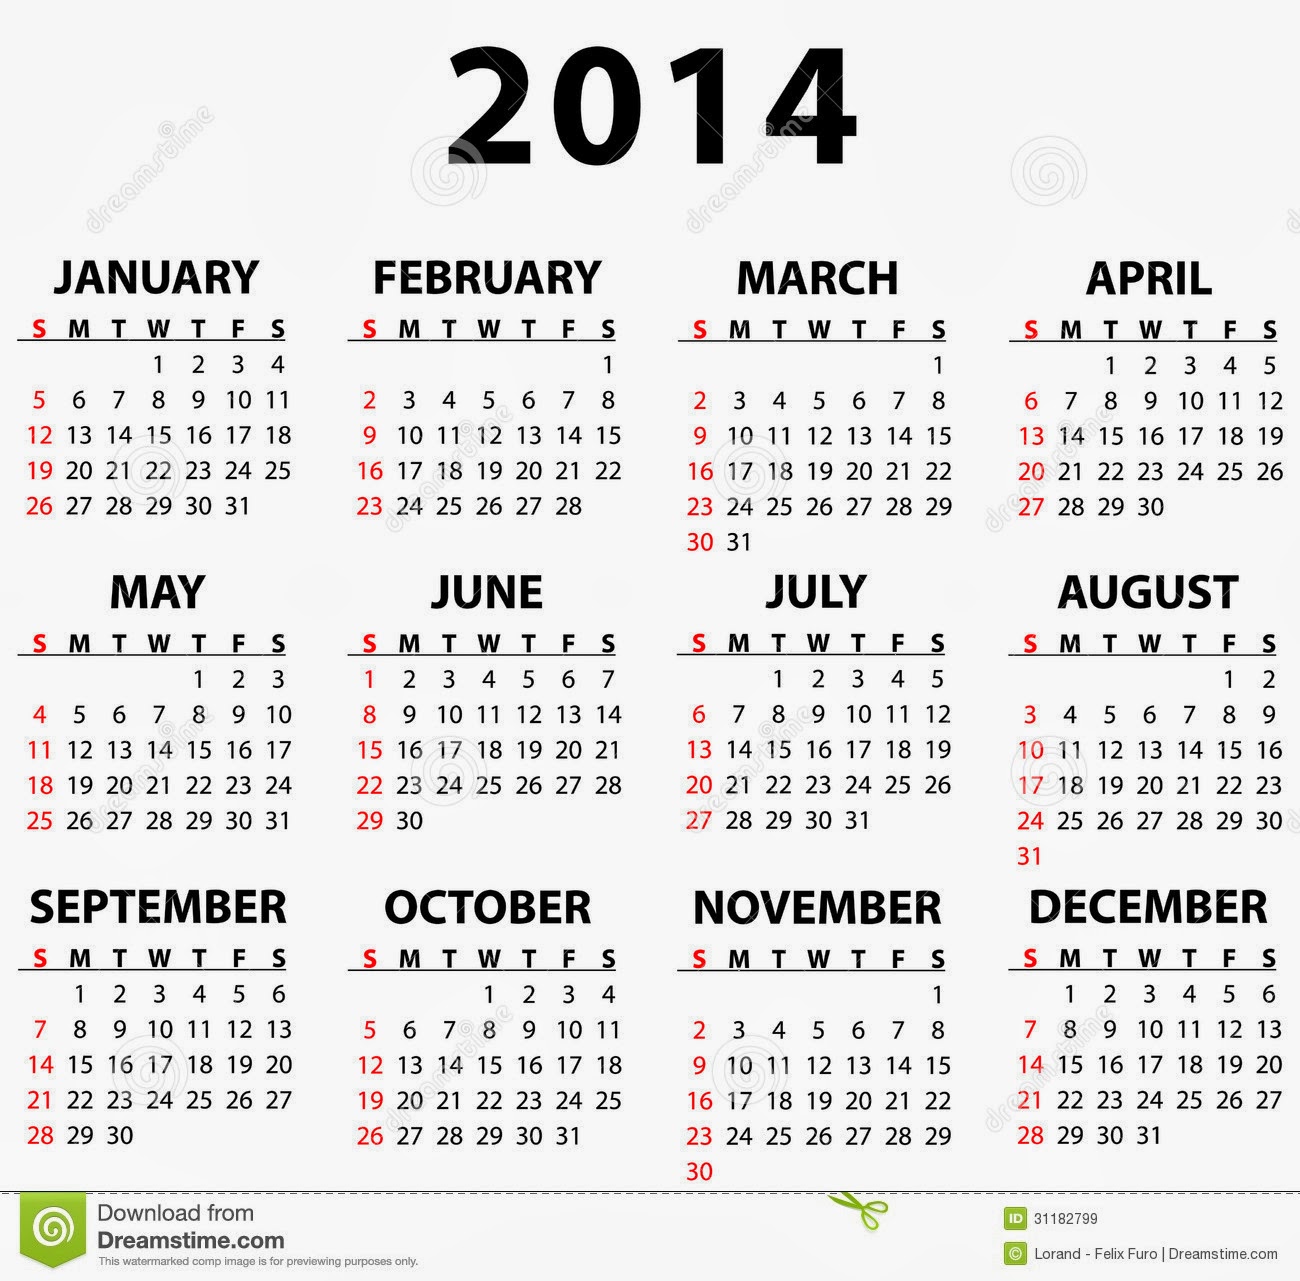 fun2run-2014-calendar-of-some-local-running-events